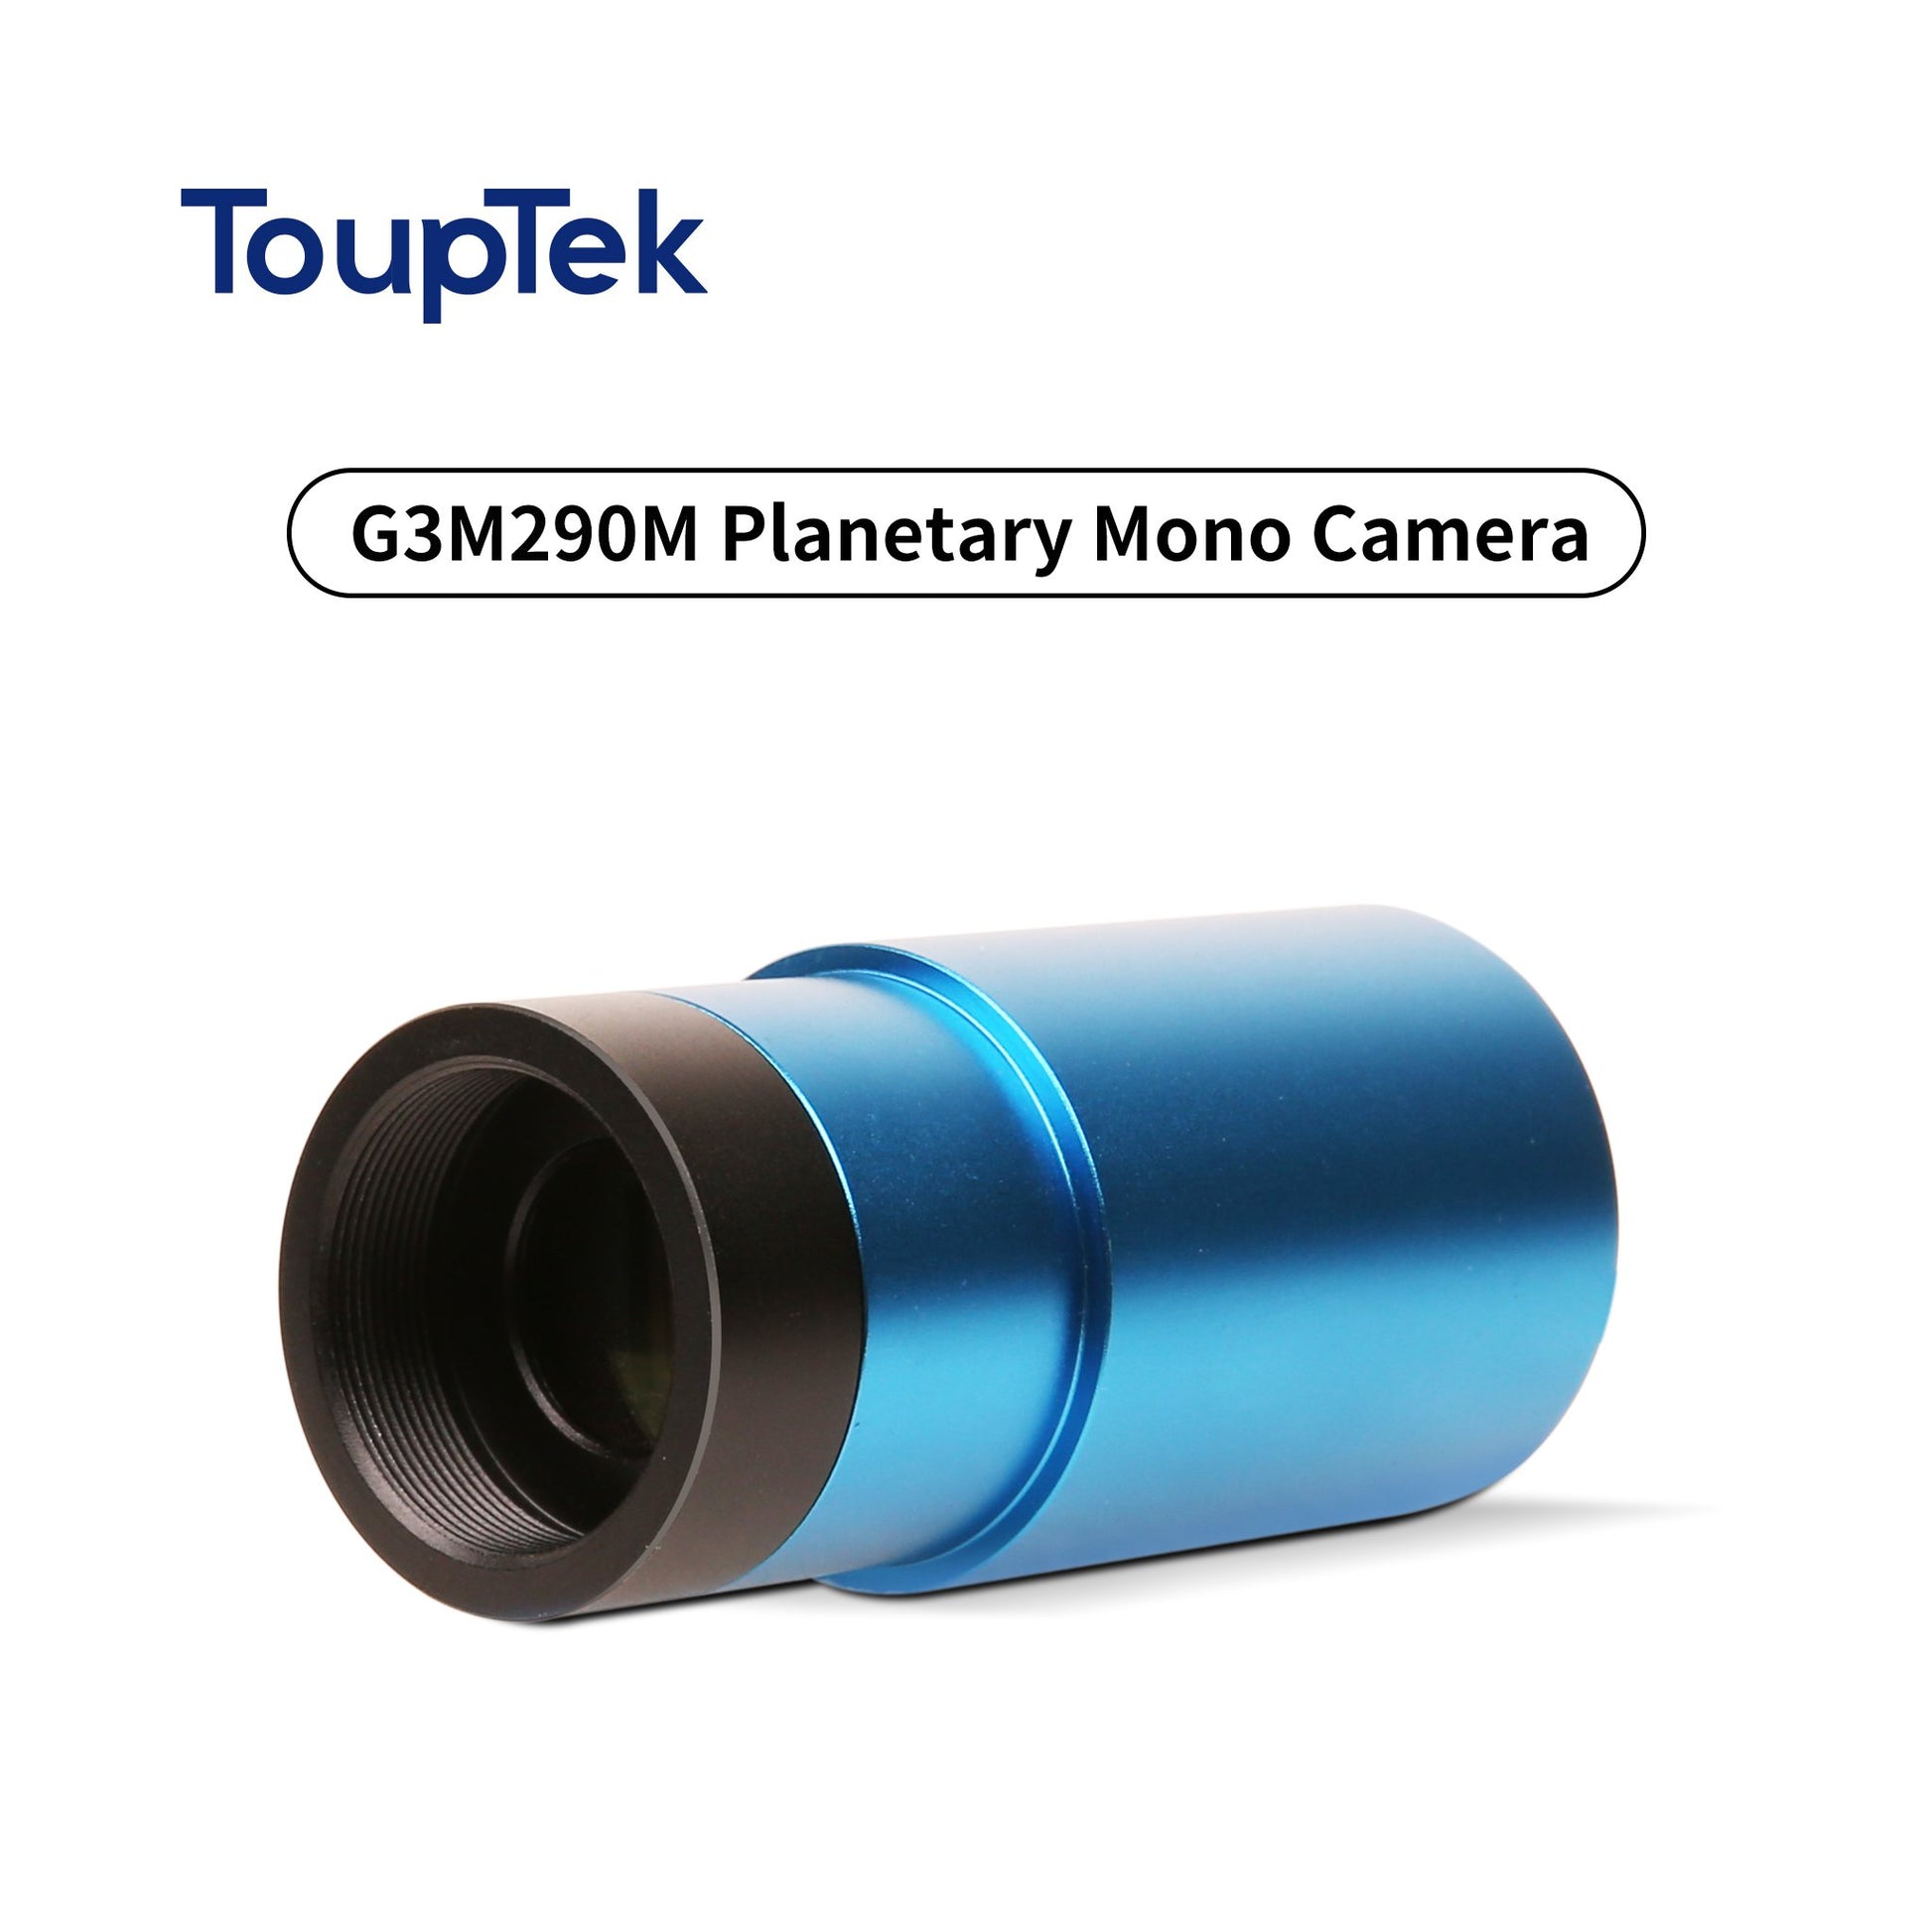 G3M290M Planetary Mono Camera